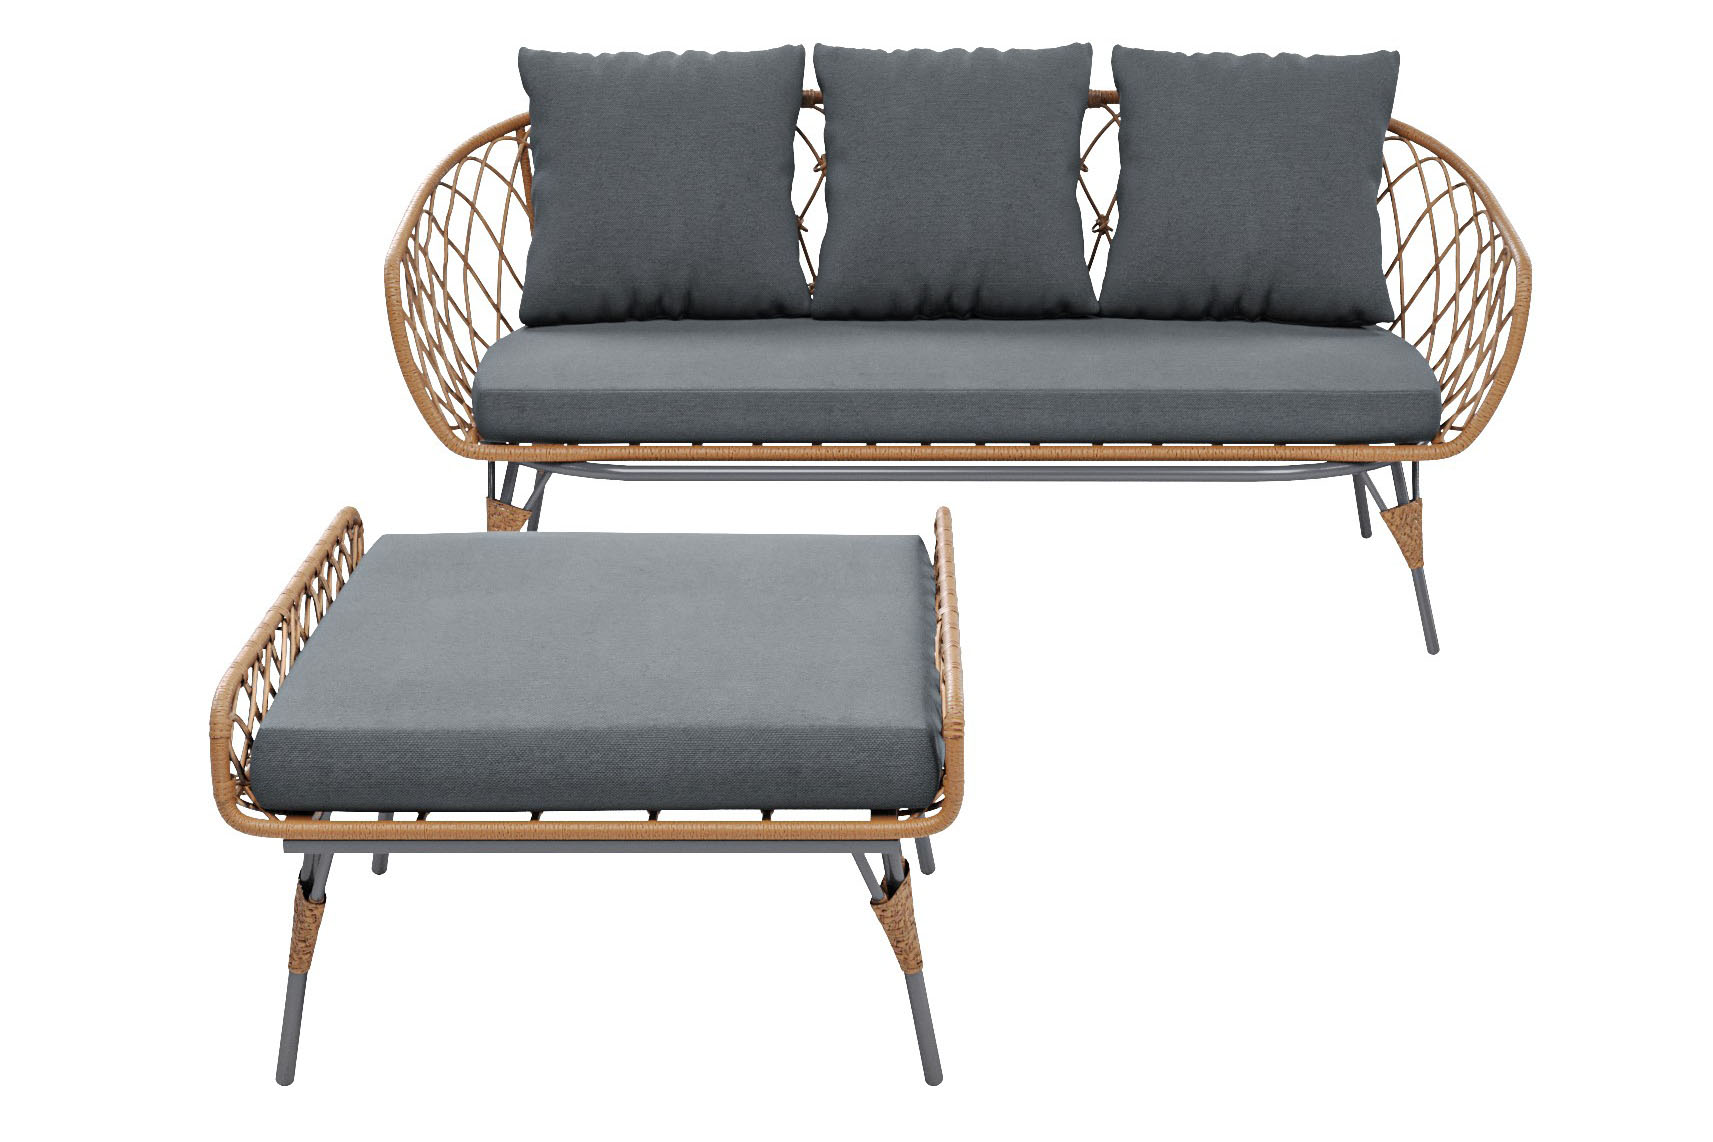 3 Seater Rattan Garden Sofa Set with Footstool